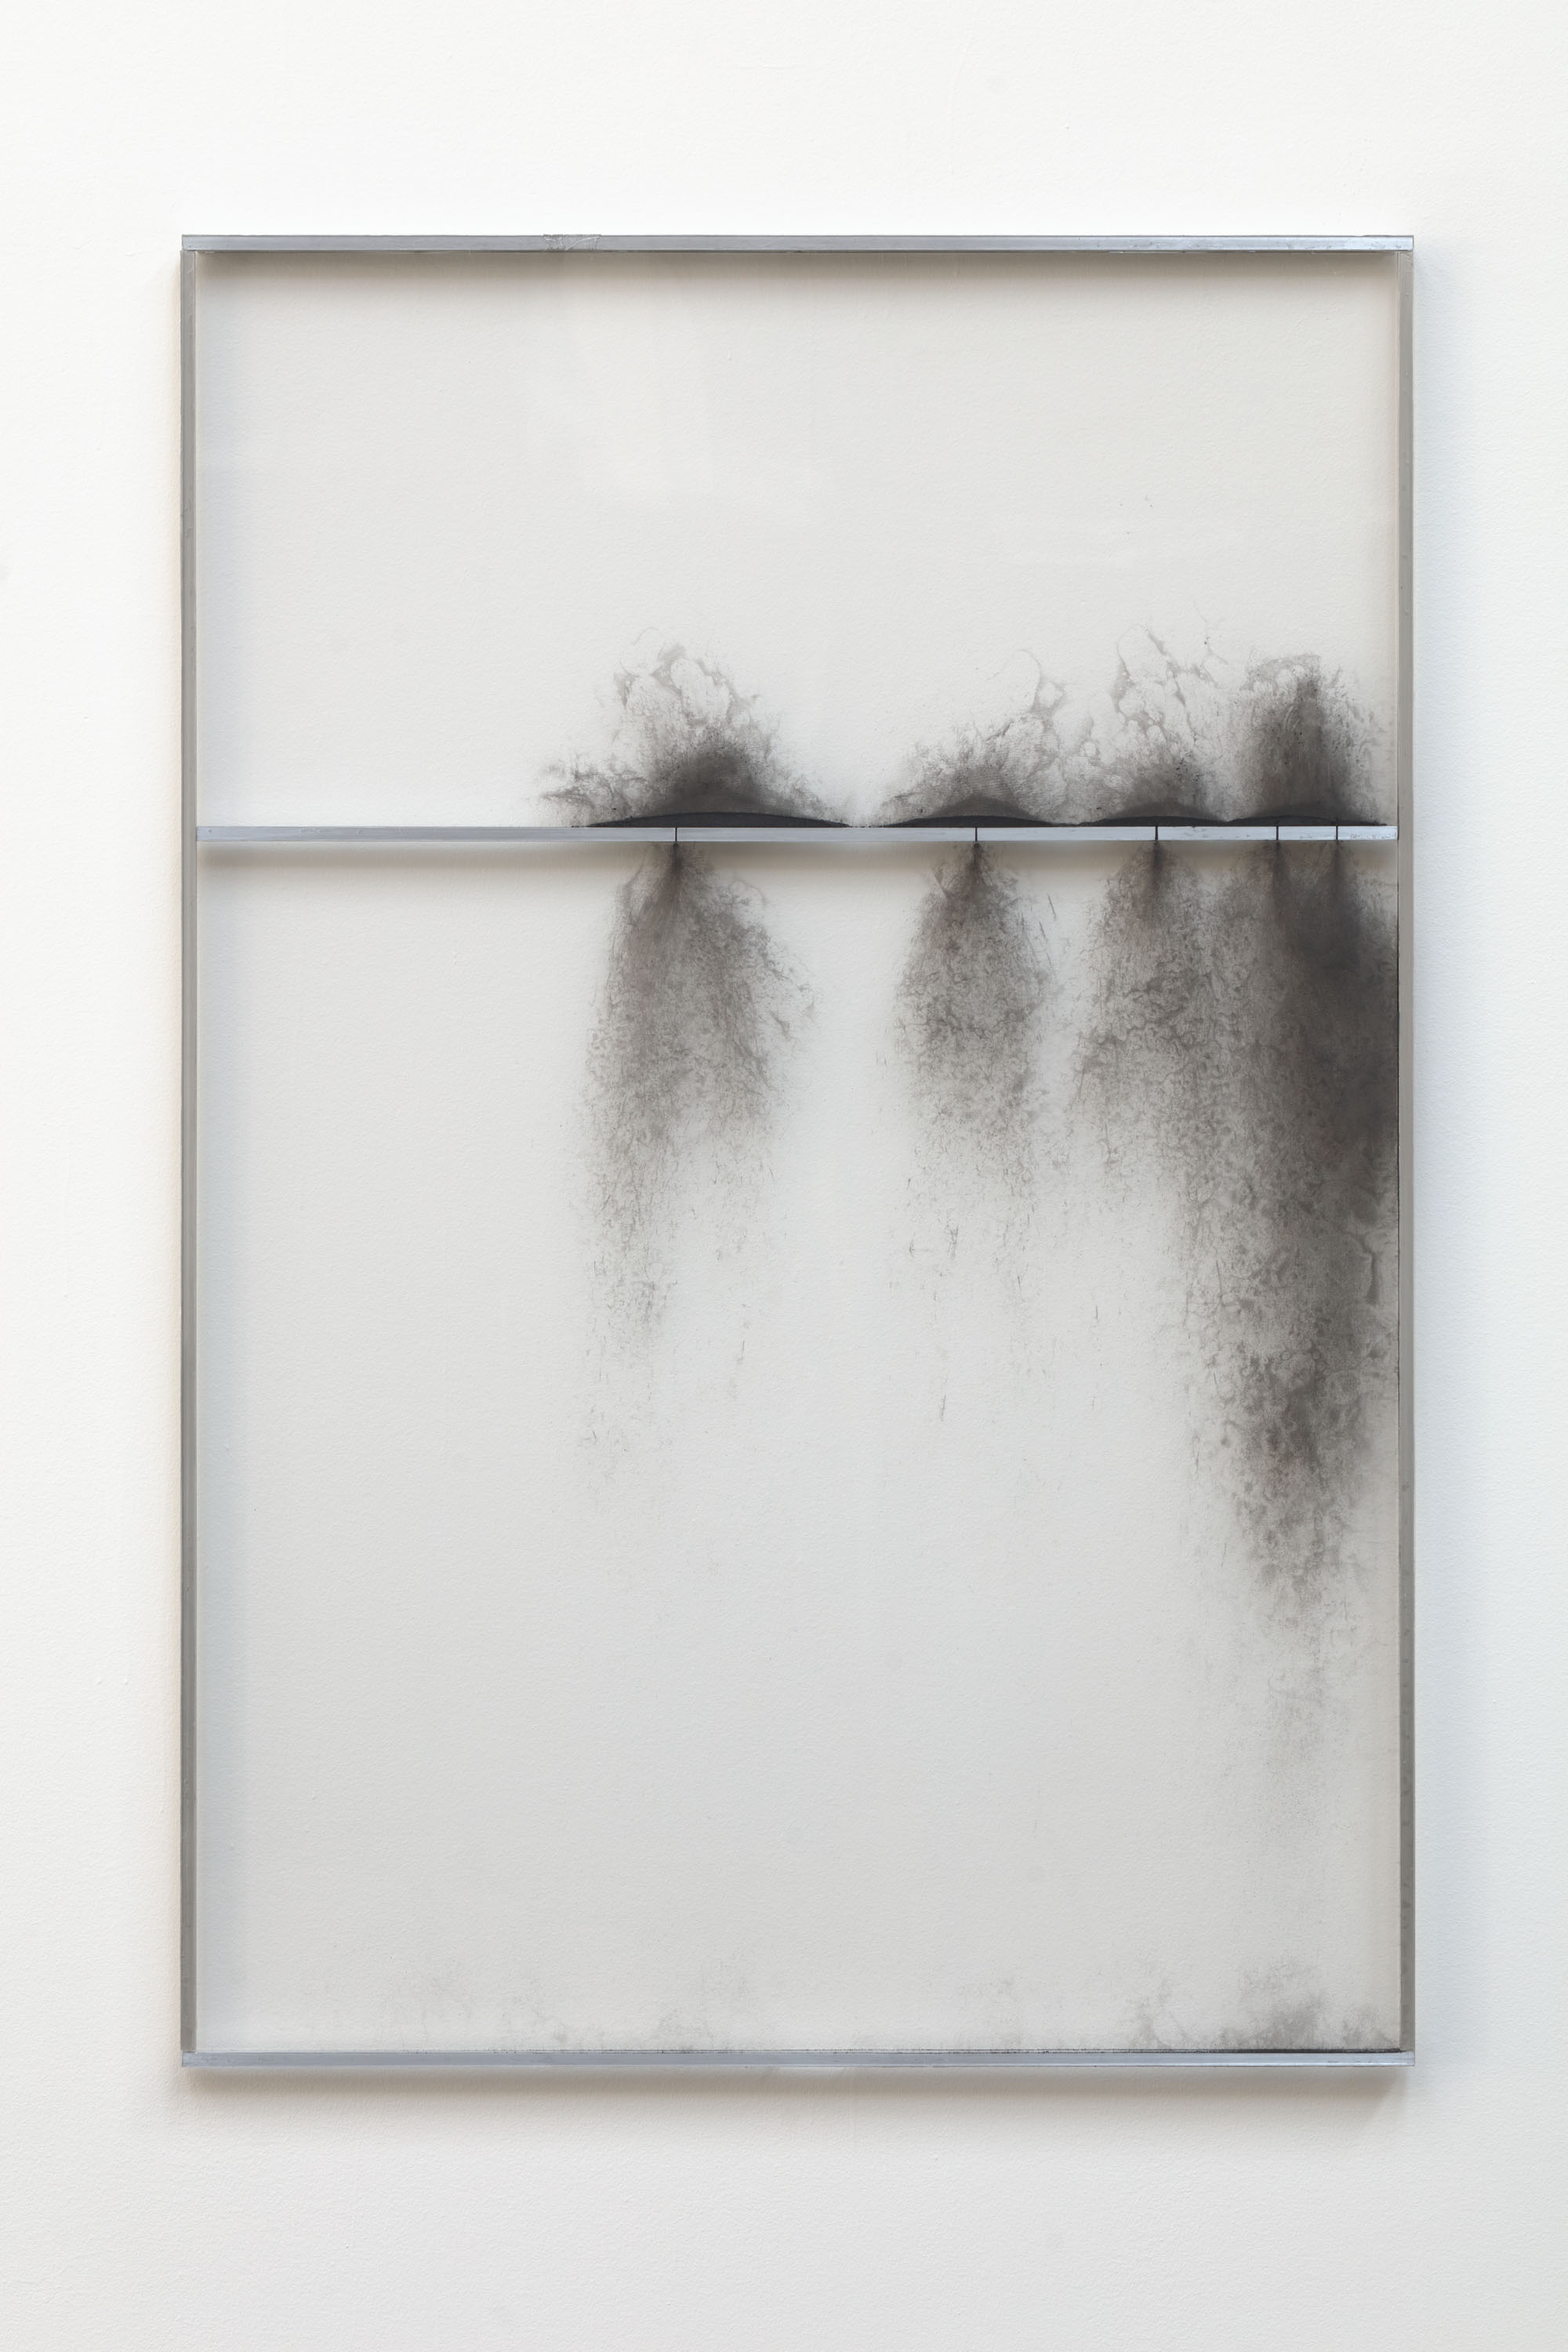  Ladislav Jezbera,  Untitled , 2016, perspex and pigments, 102 x 152 cm 